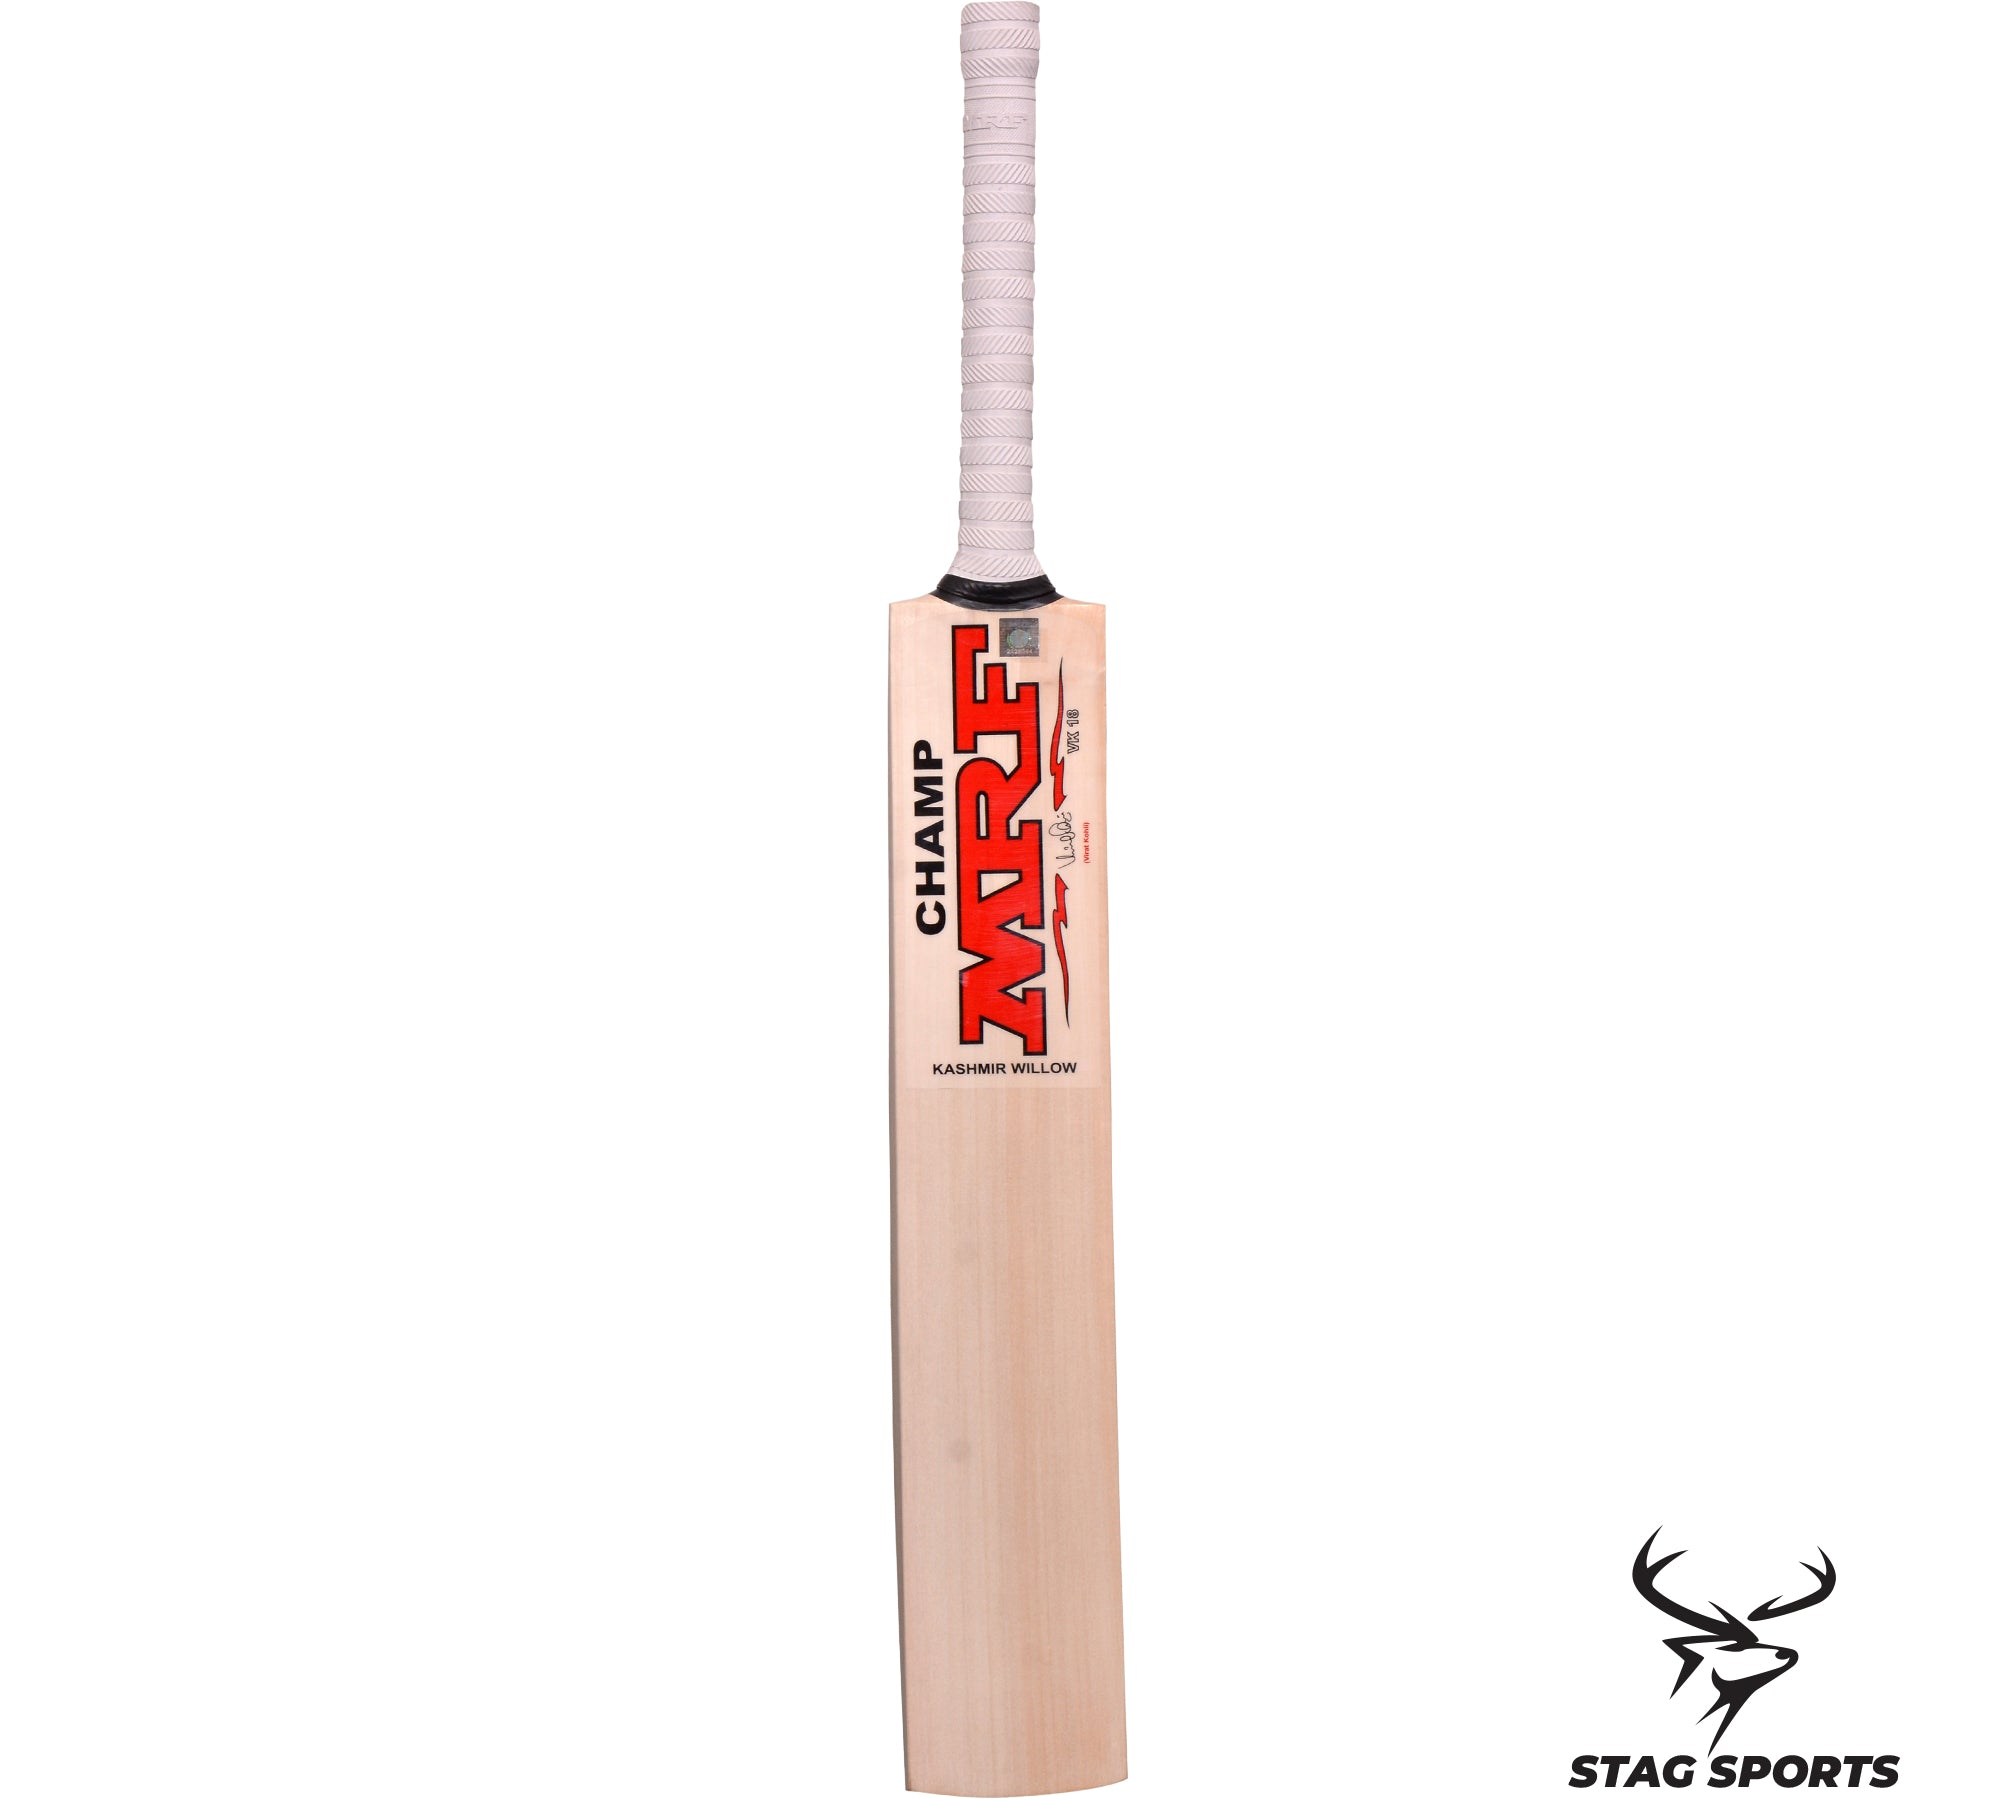 MRF Champ Junior Cricket Bat